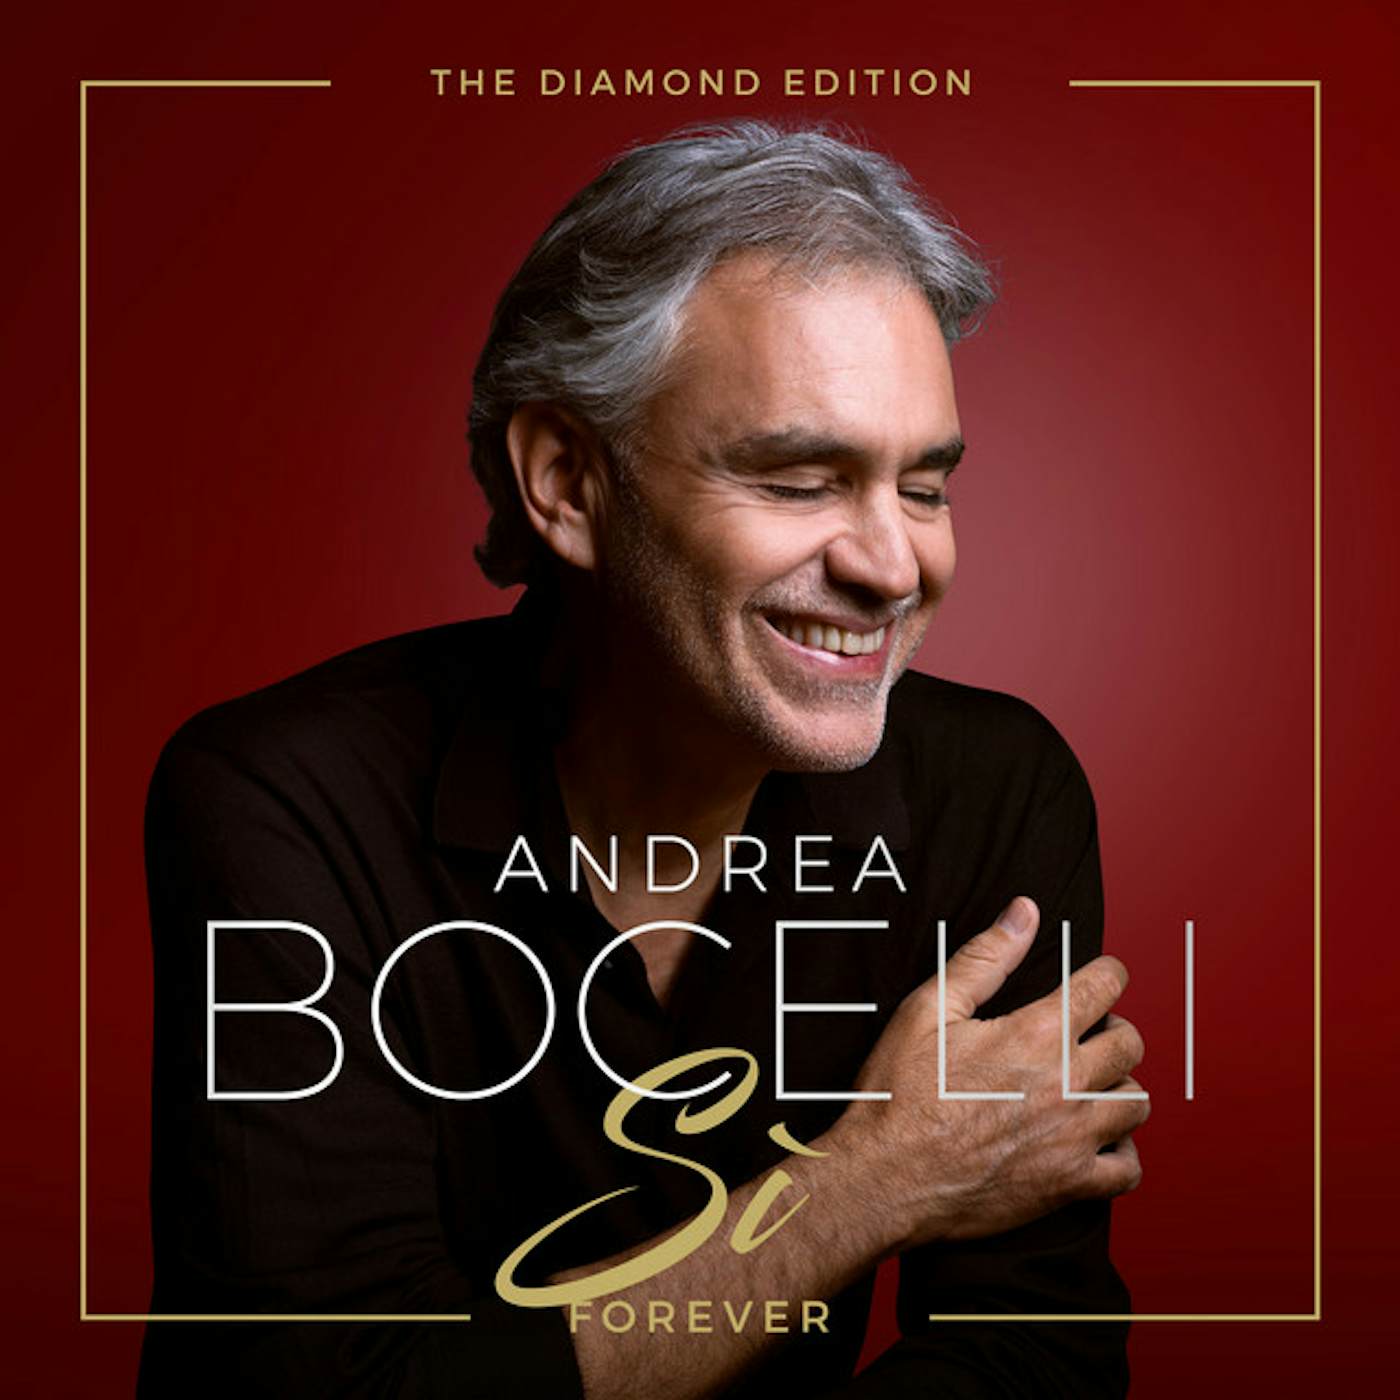 Andrea Bocelli SI FOREVER THE DIAMOND EDITION CD